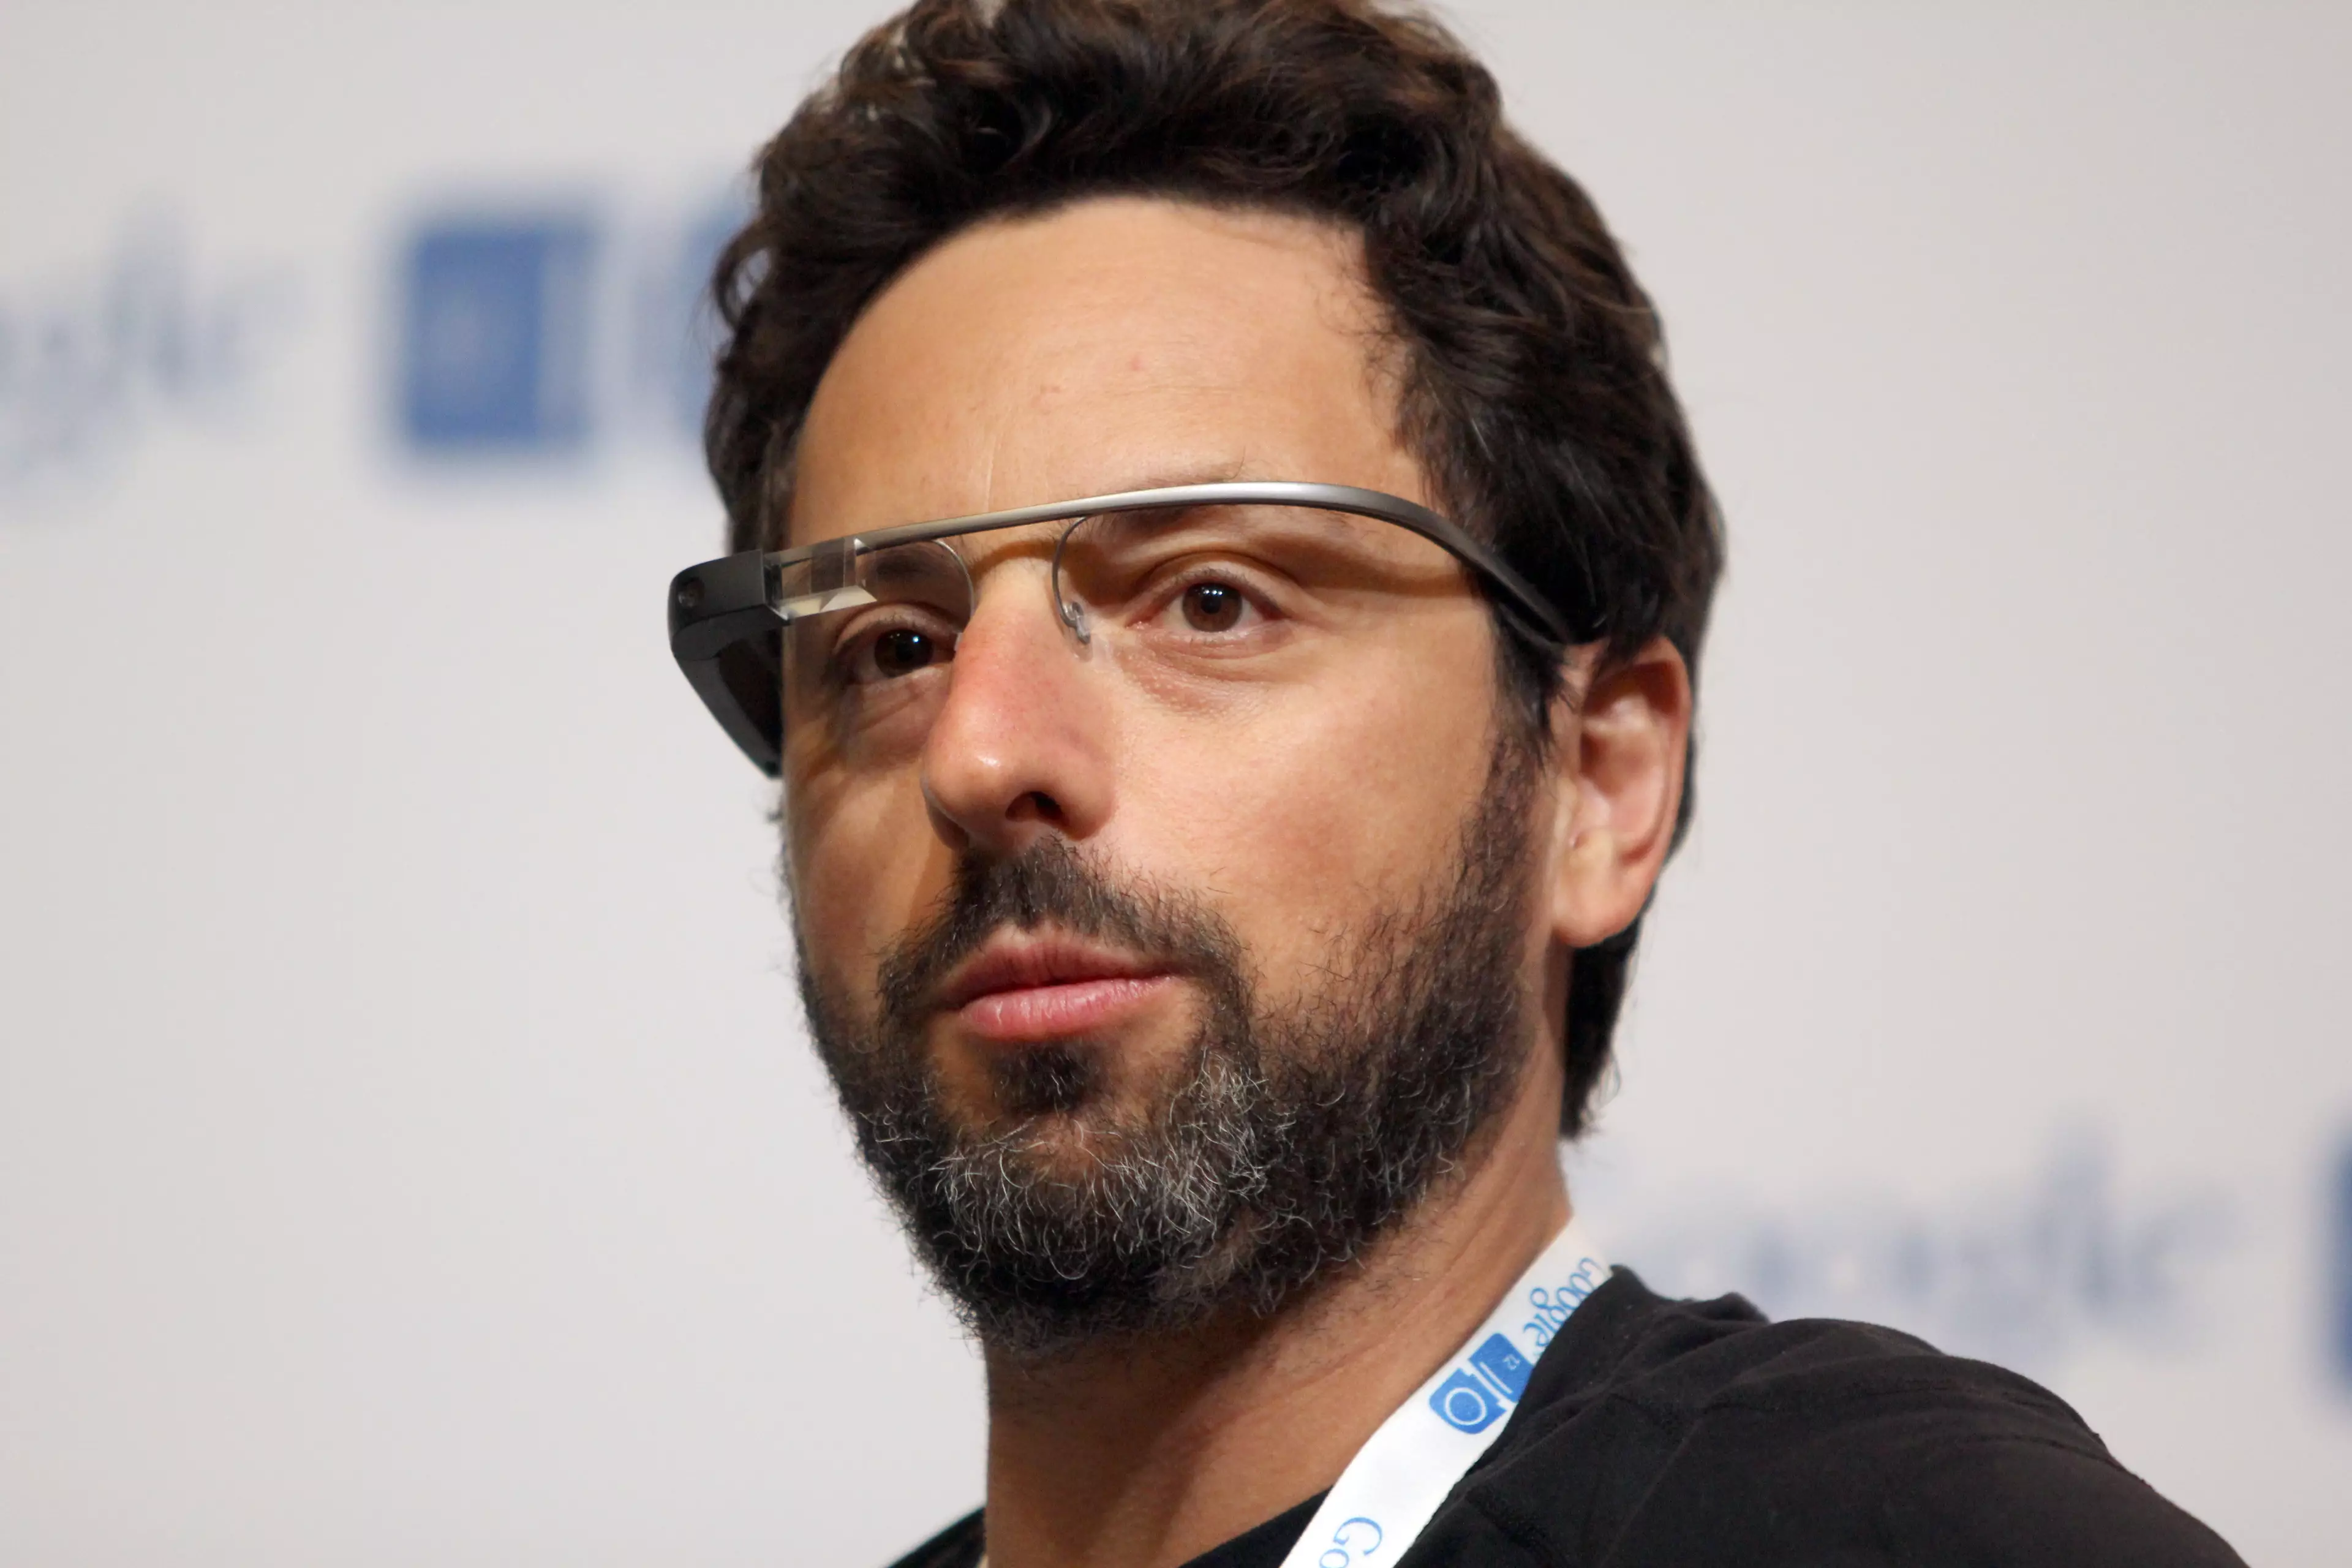 Sergey Brin founded Google 21 years ago.